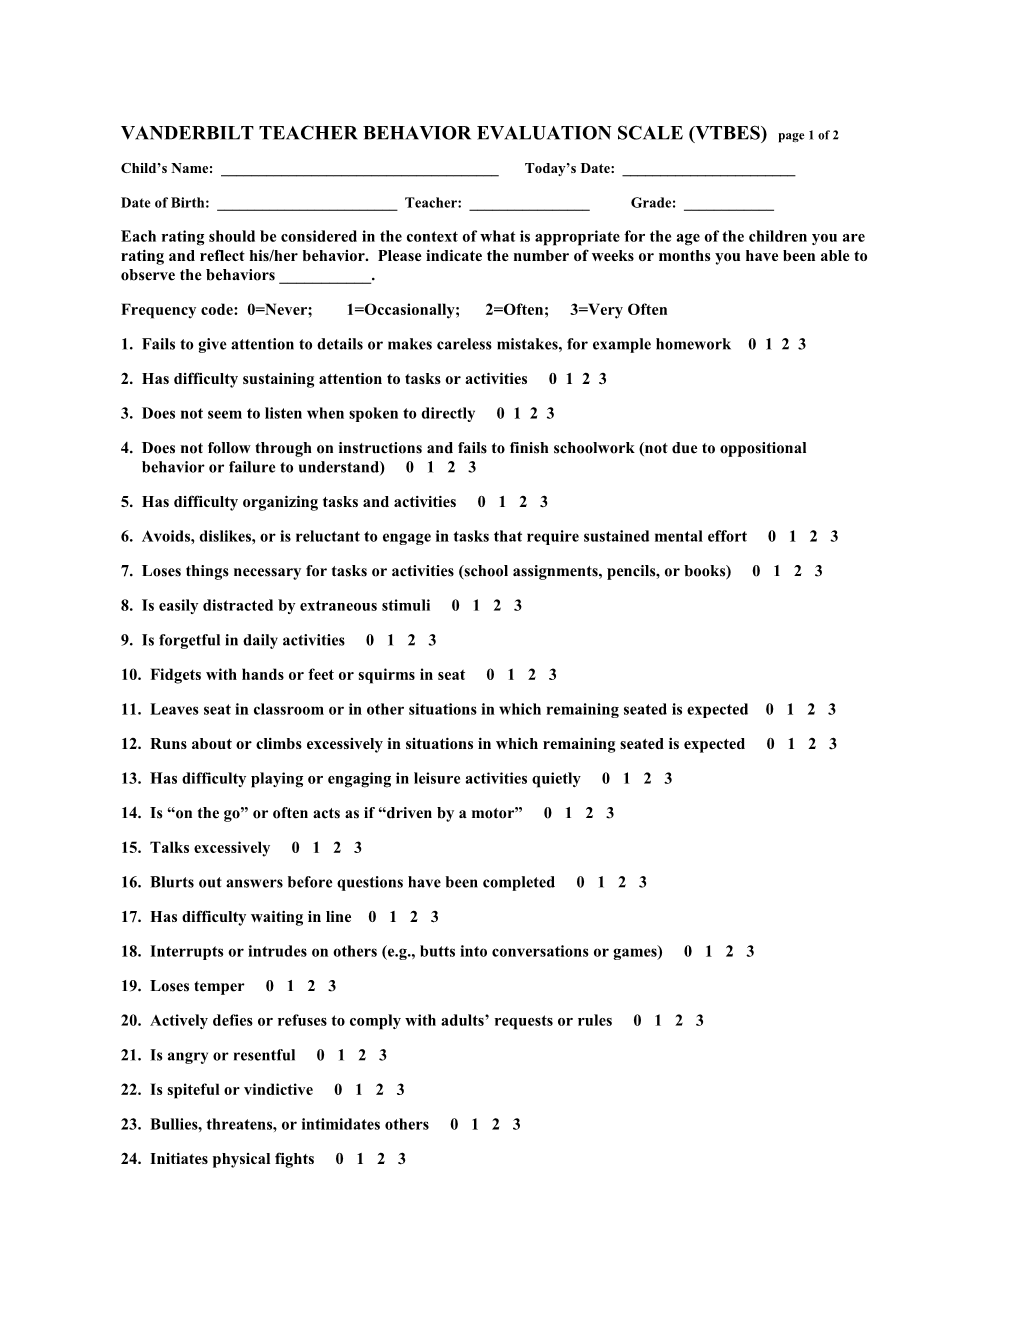 VANDERBILT TEACHER BEHAVIOR EVALUATION SCALE (VTBES) Page 1 of 2